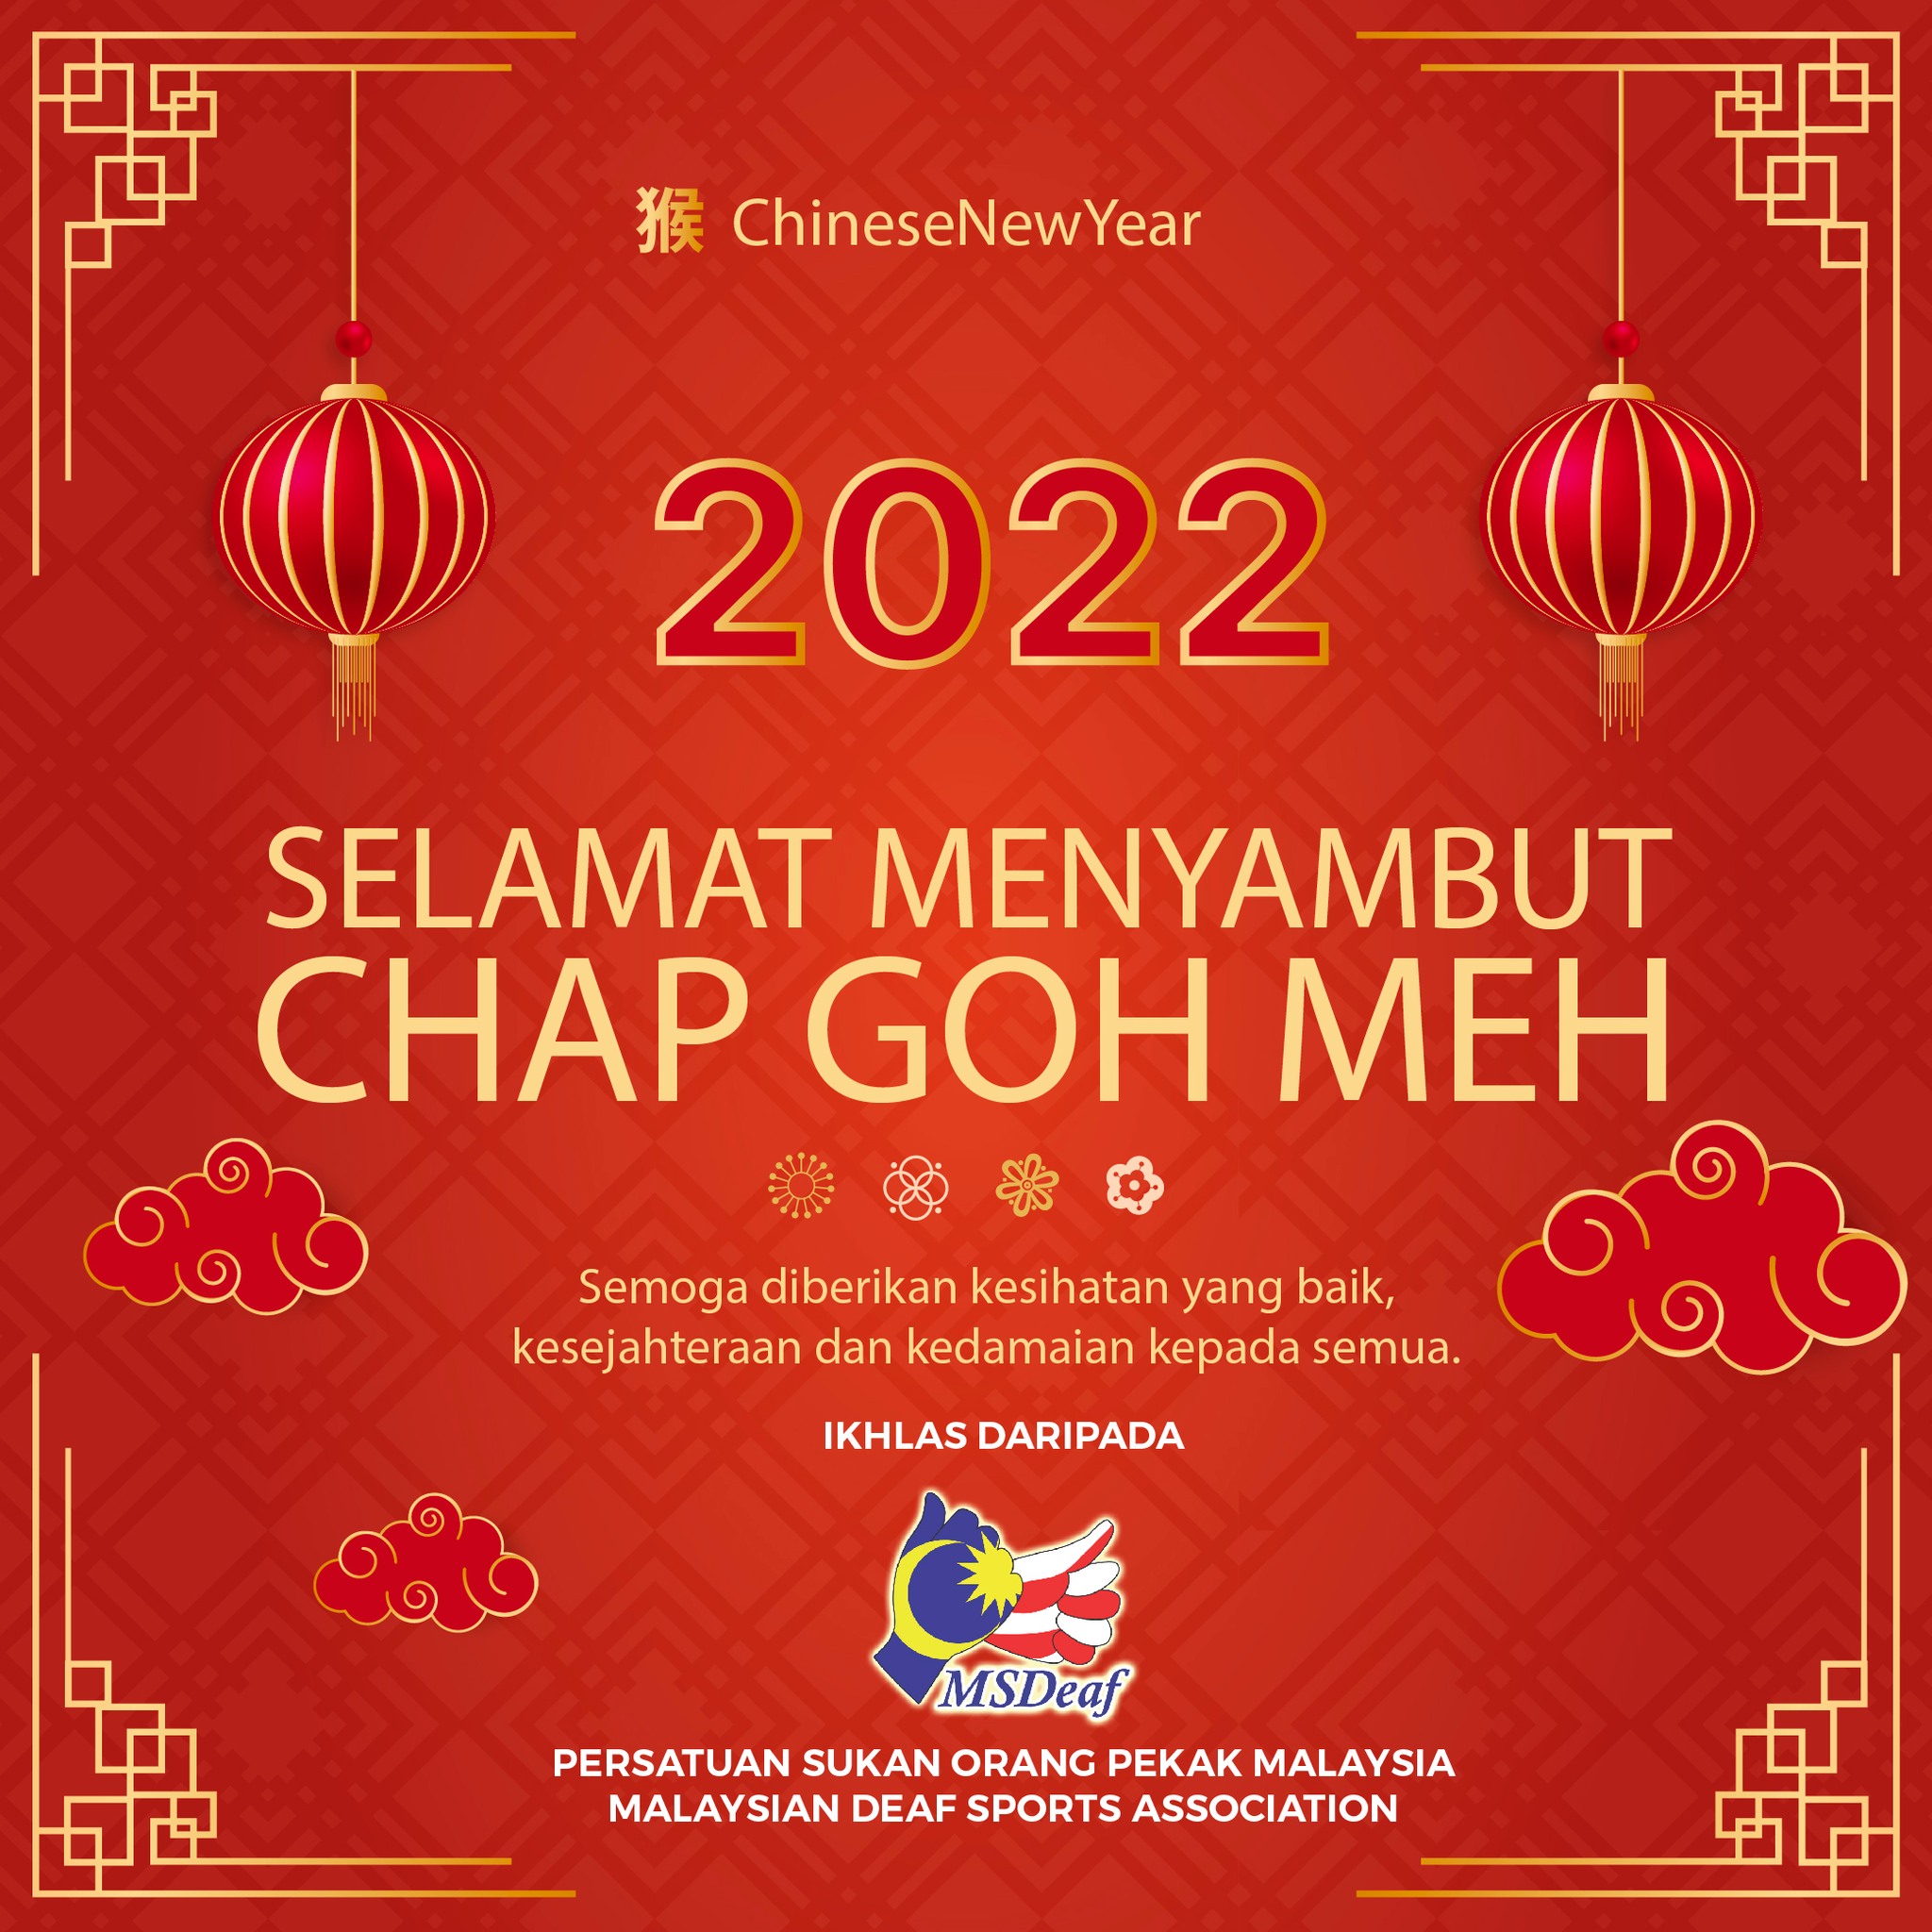 Selamat Menyambut Chap Goh Meh